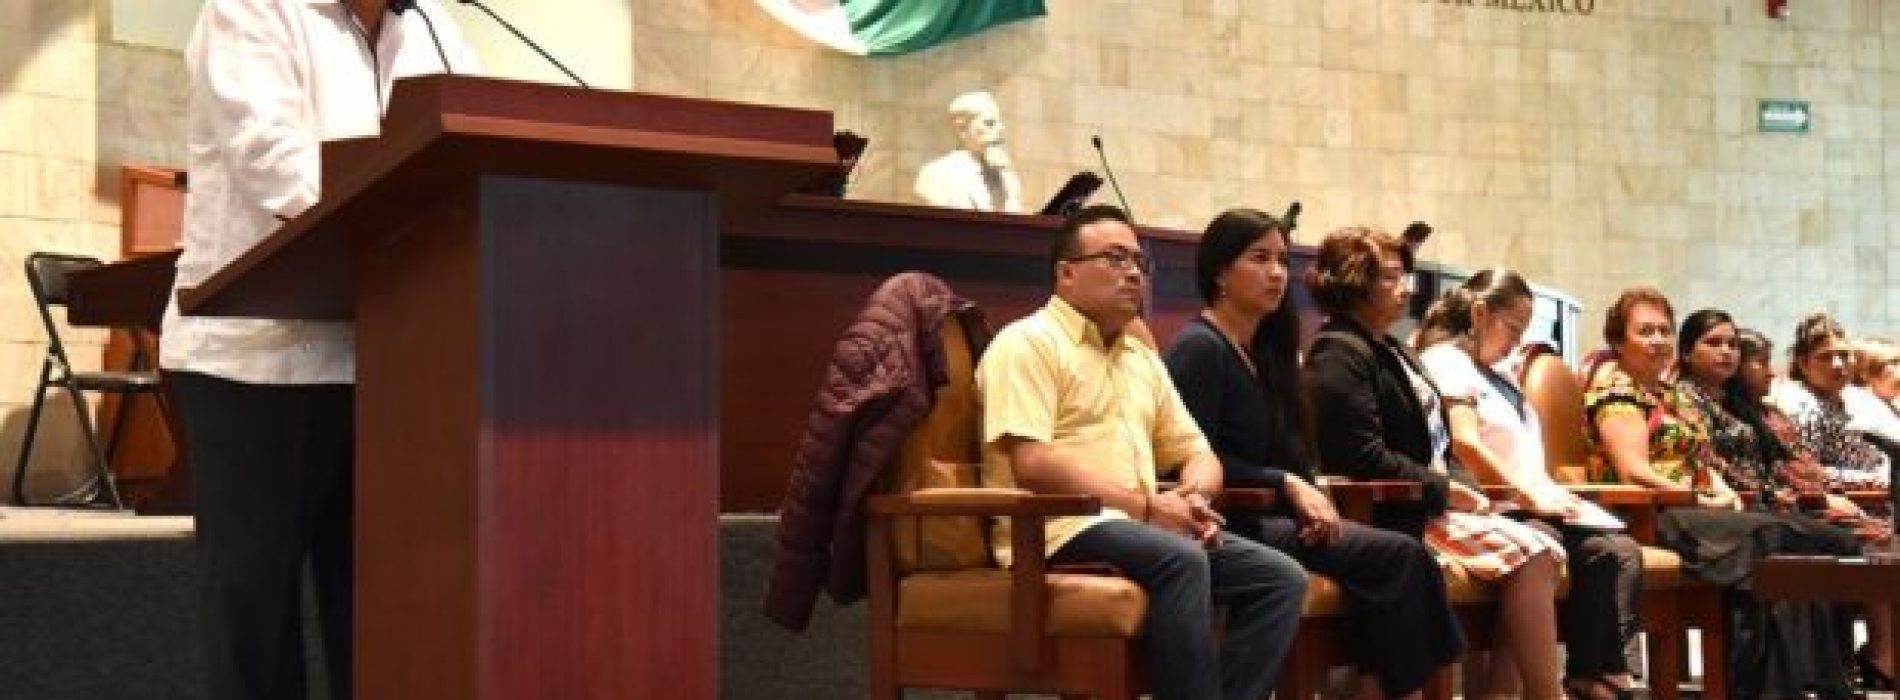 Tolerancias cero a violencia de género en universidades: Congreso de Oaxaca